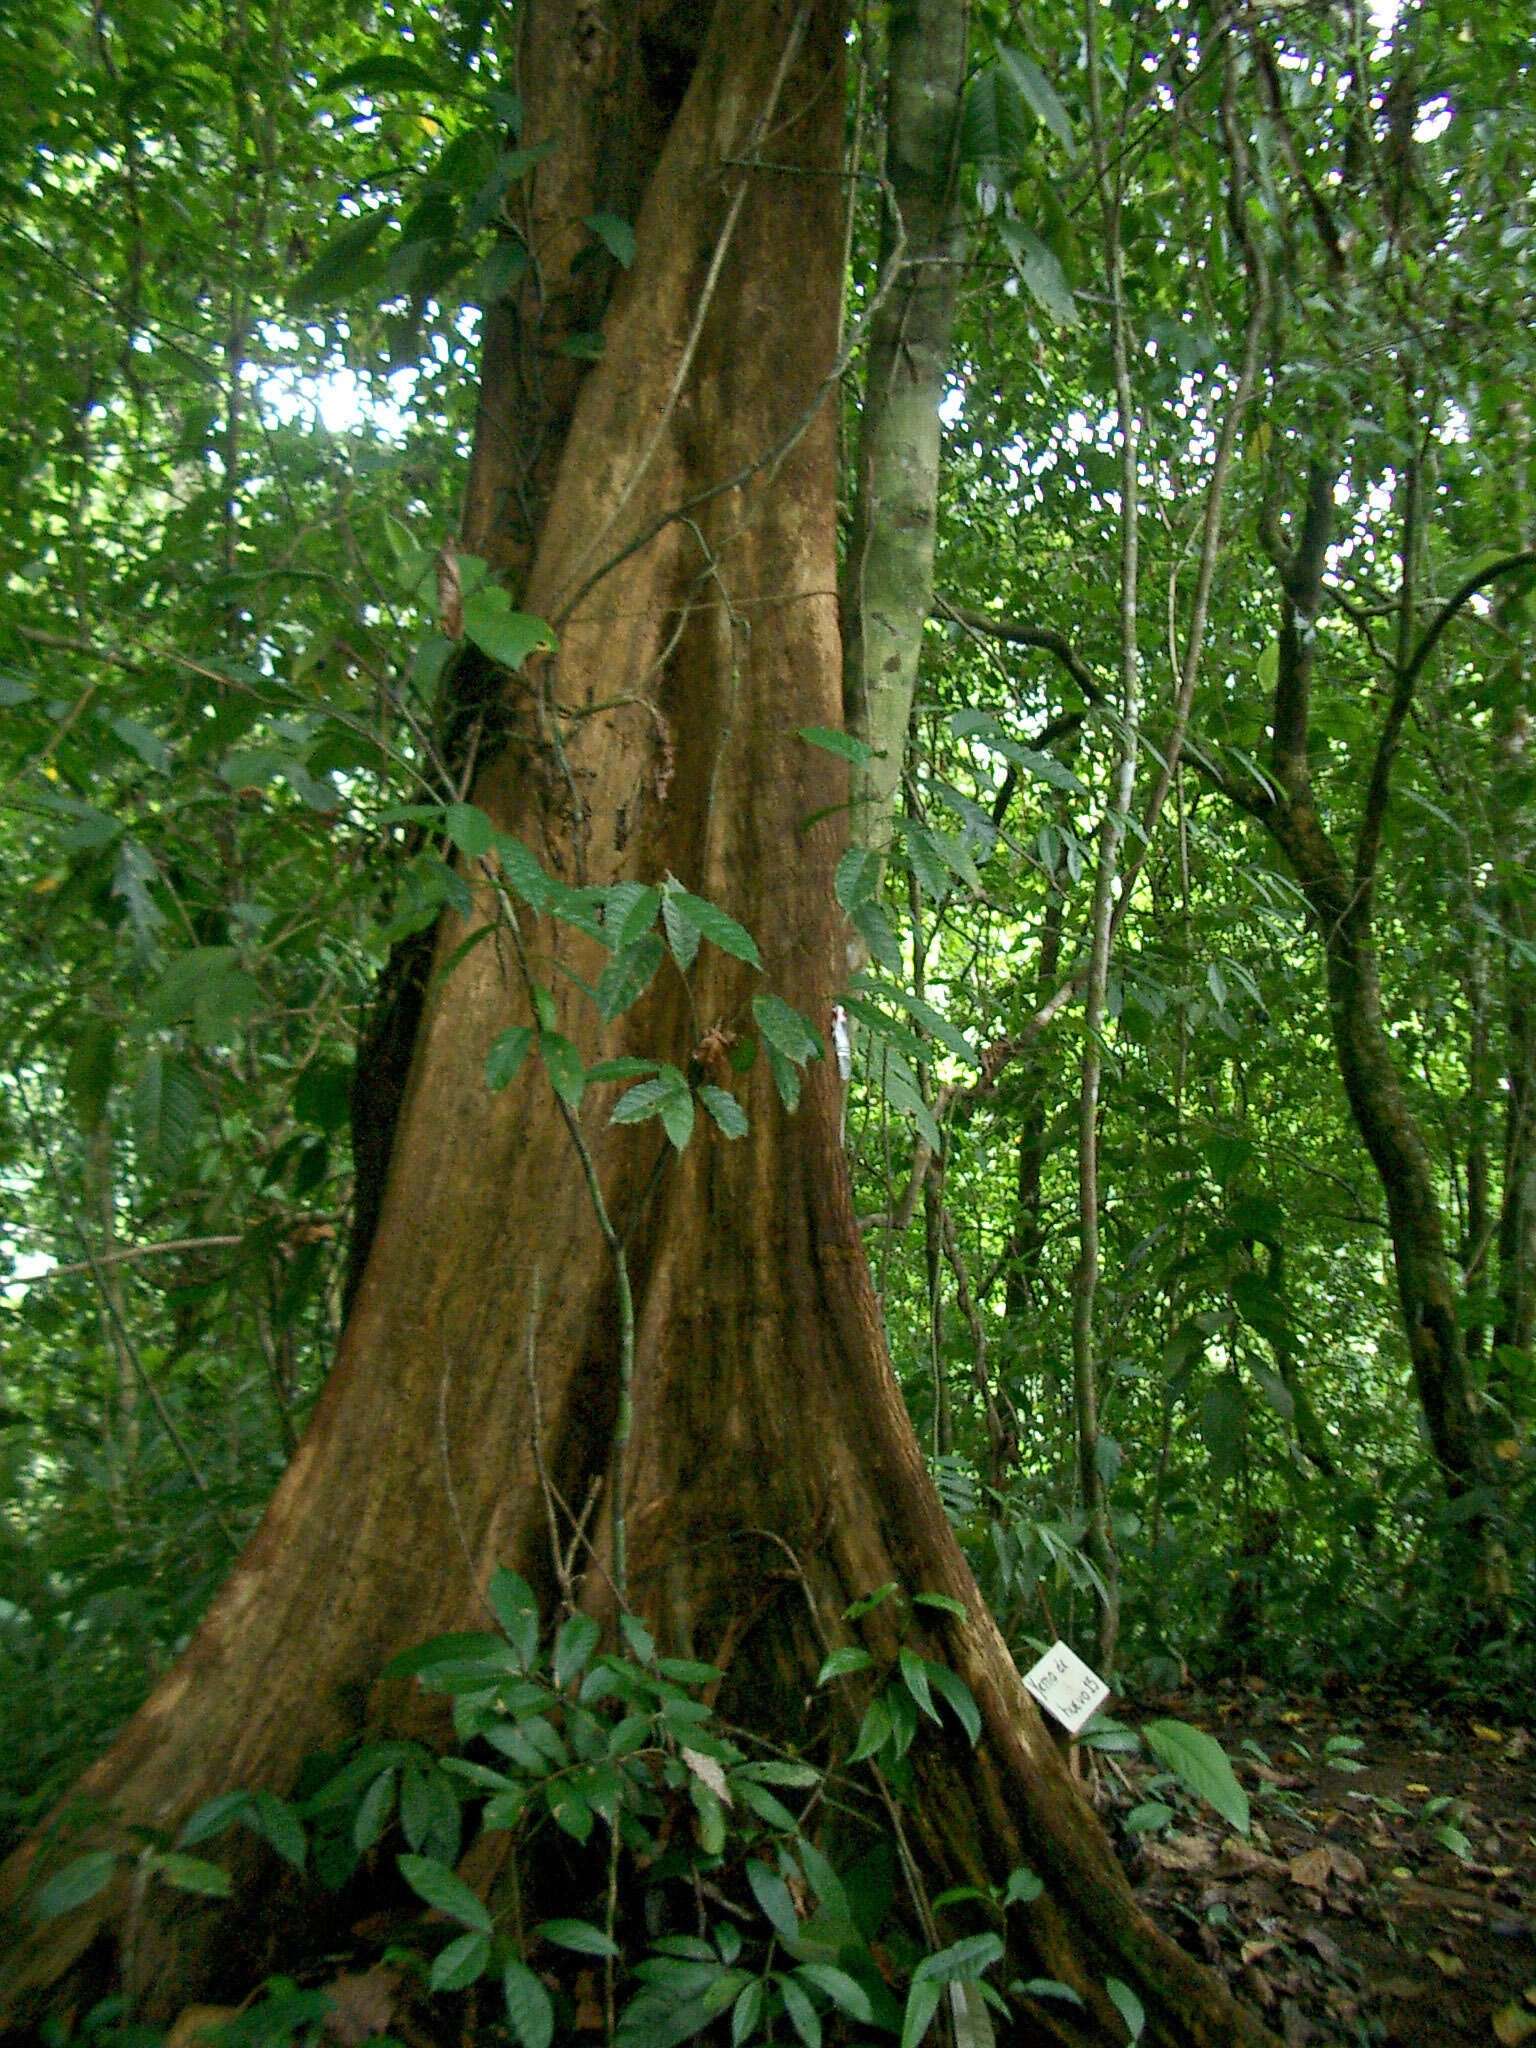 Image of Chimarrhis latifolia Standl.